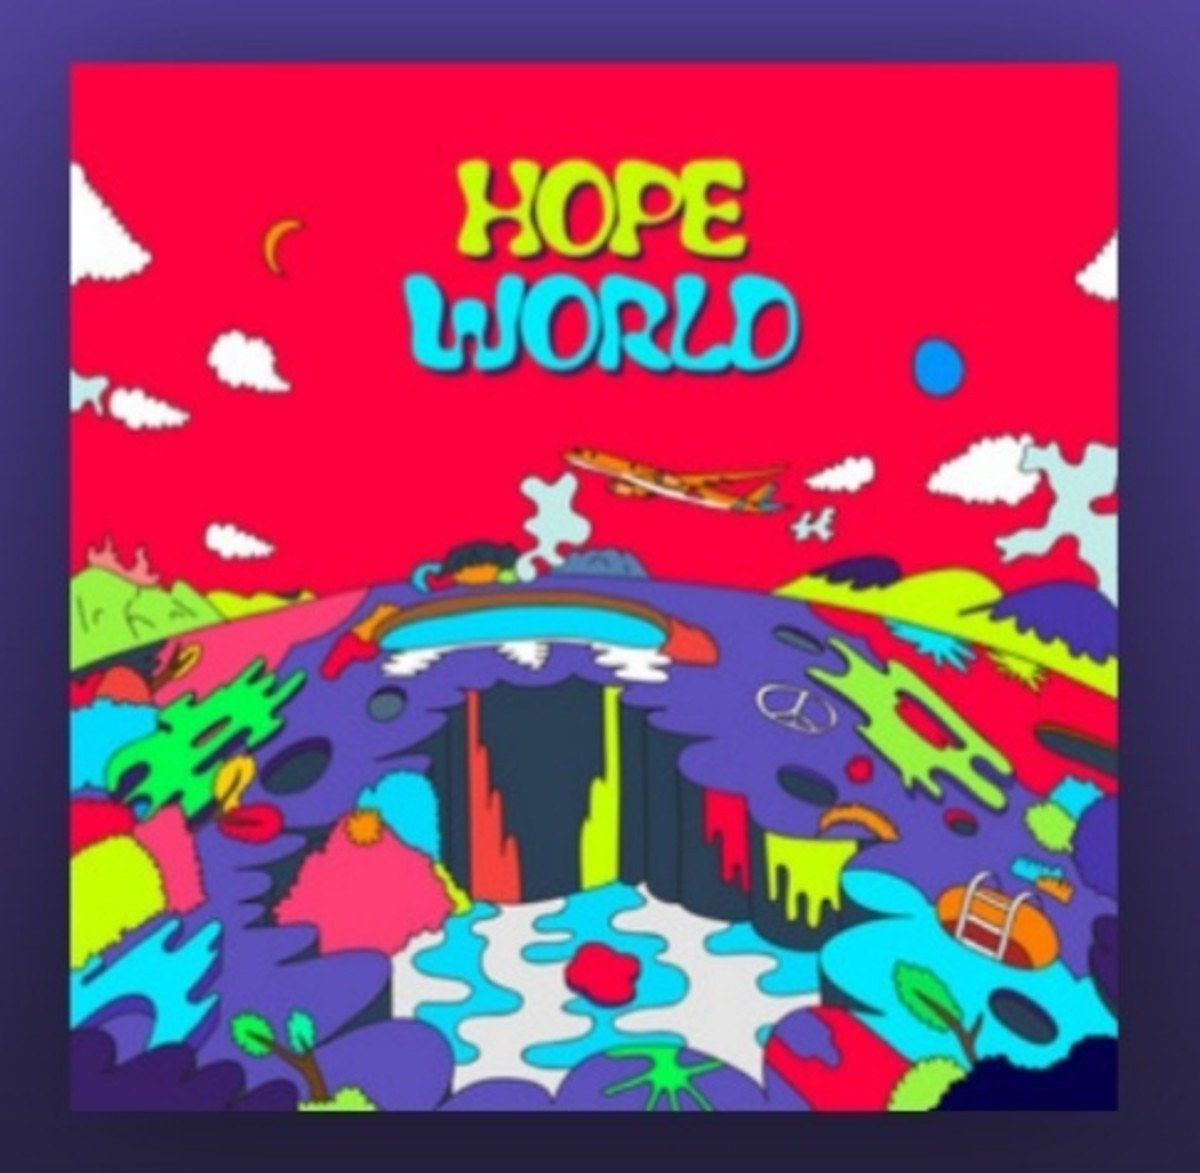 Hope World Mixtape: The Sunshine That J-Hope Brings